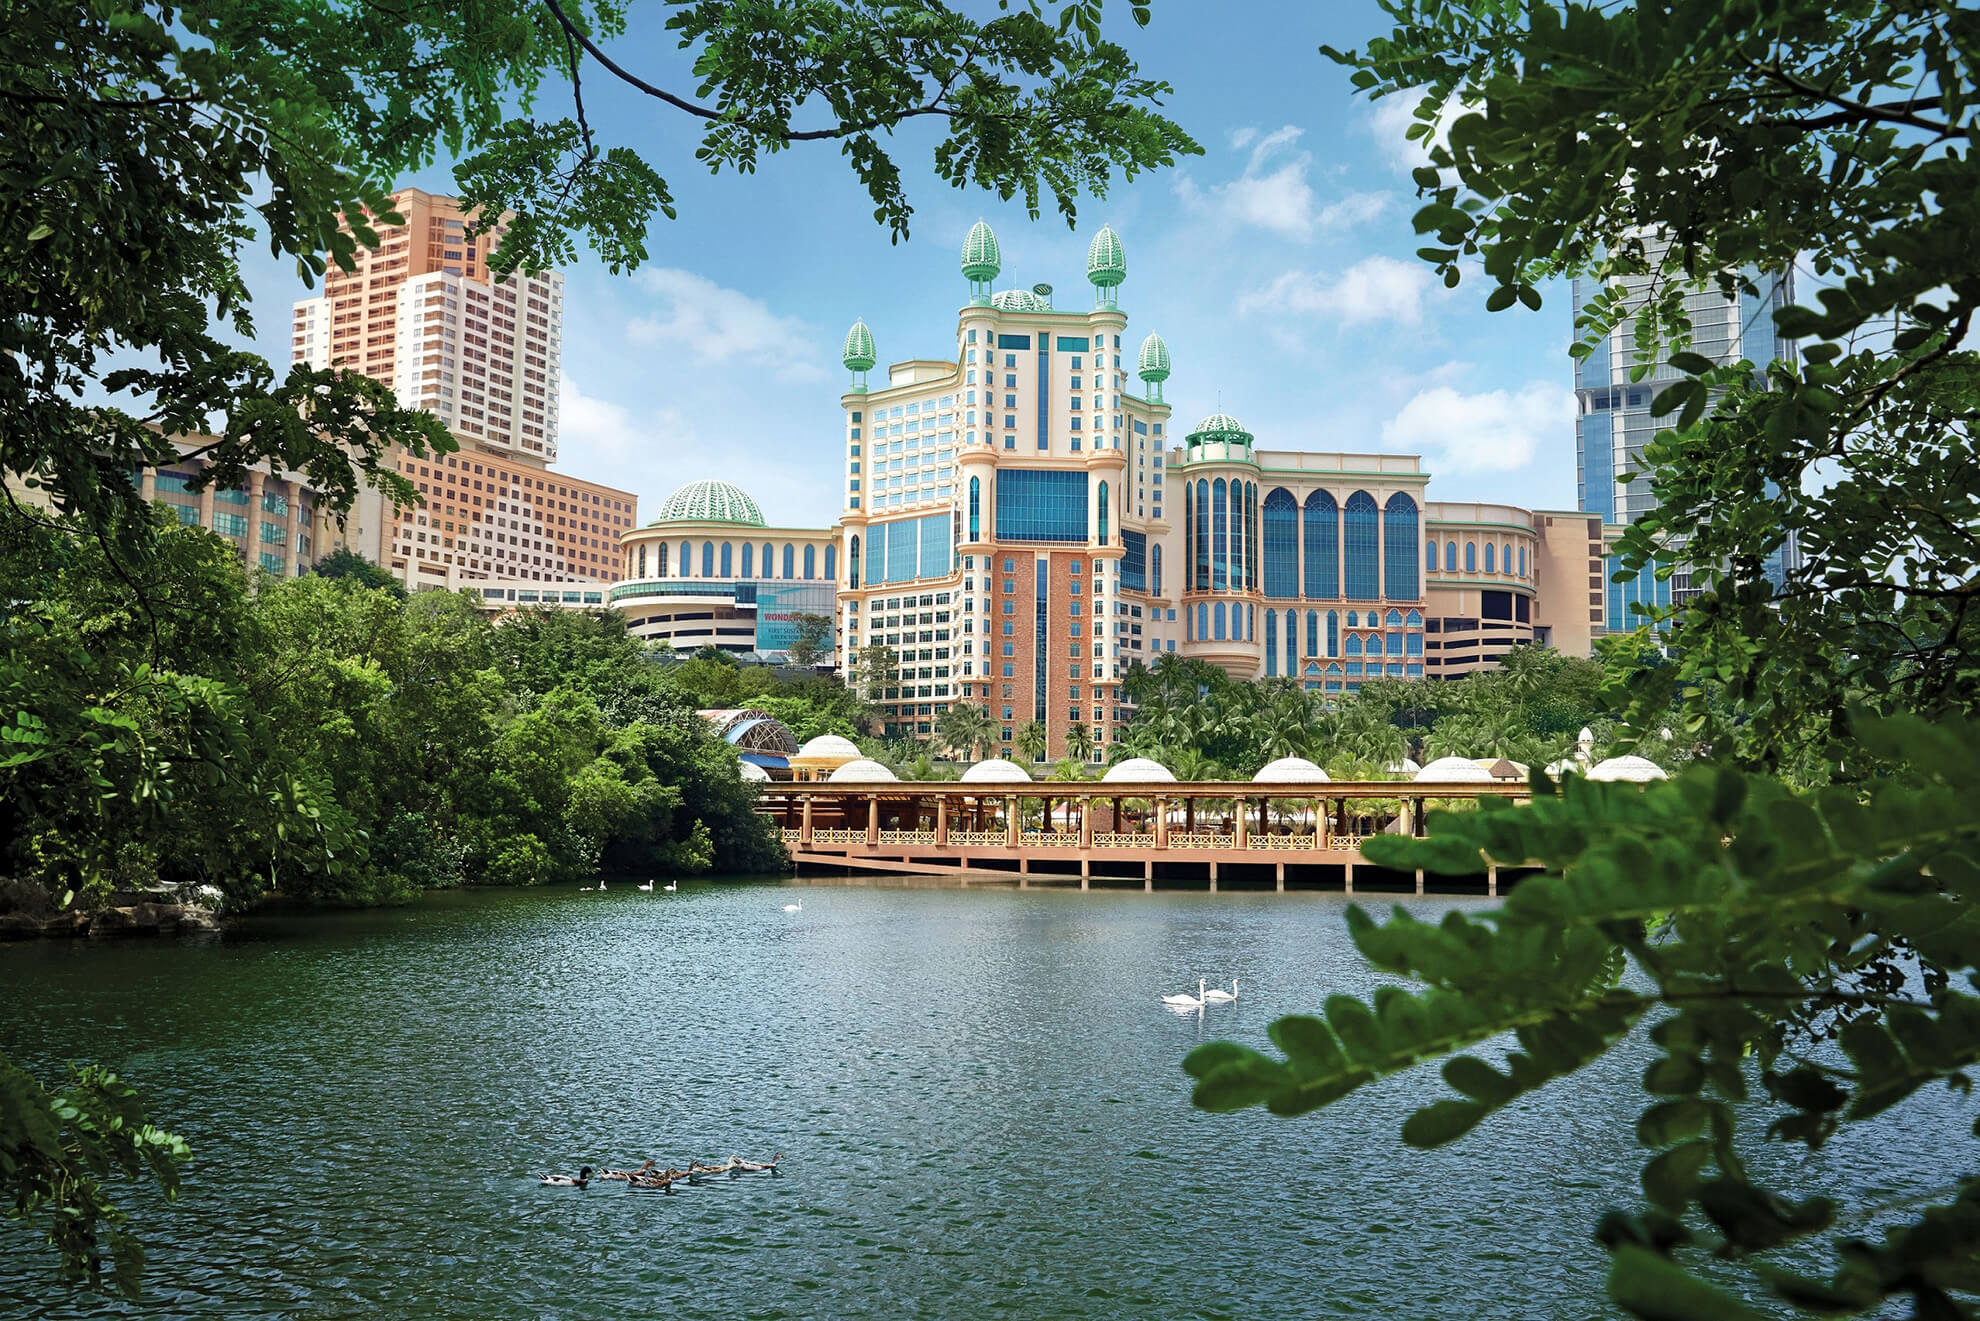 Sunway City Kuala Lumpur Eyes New Era with Total Transformation of Its Flagship Sunway Resort